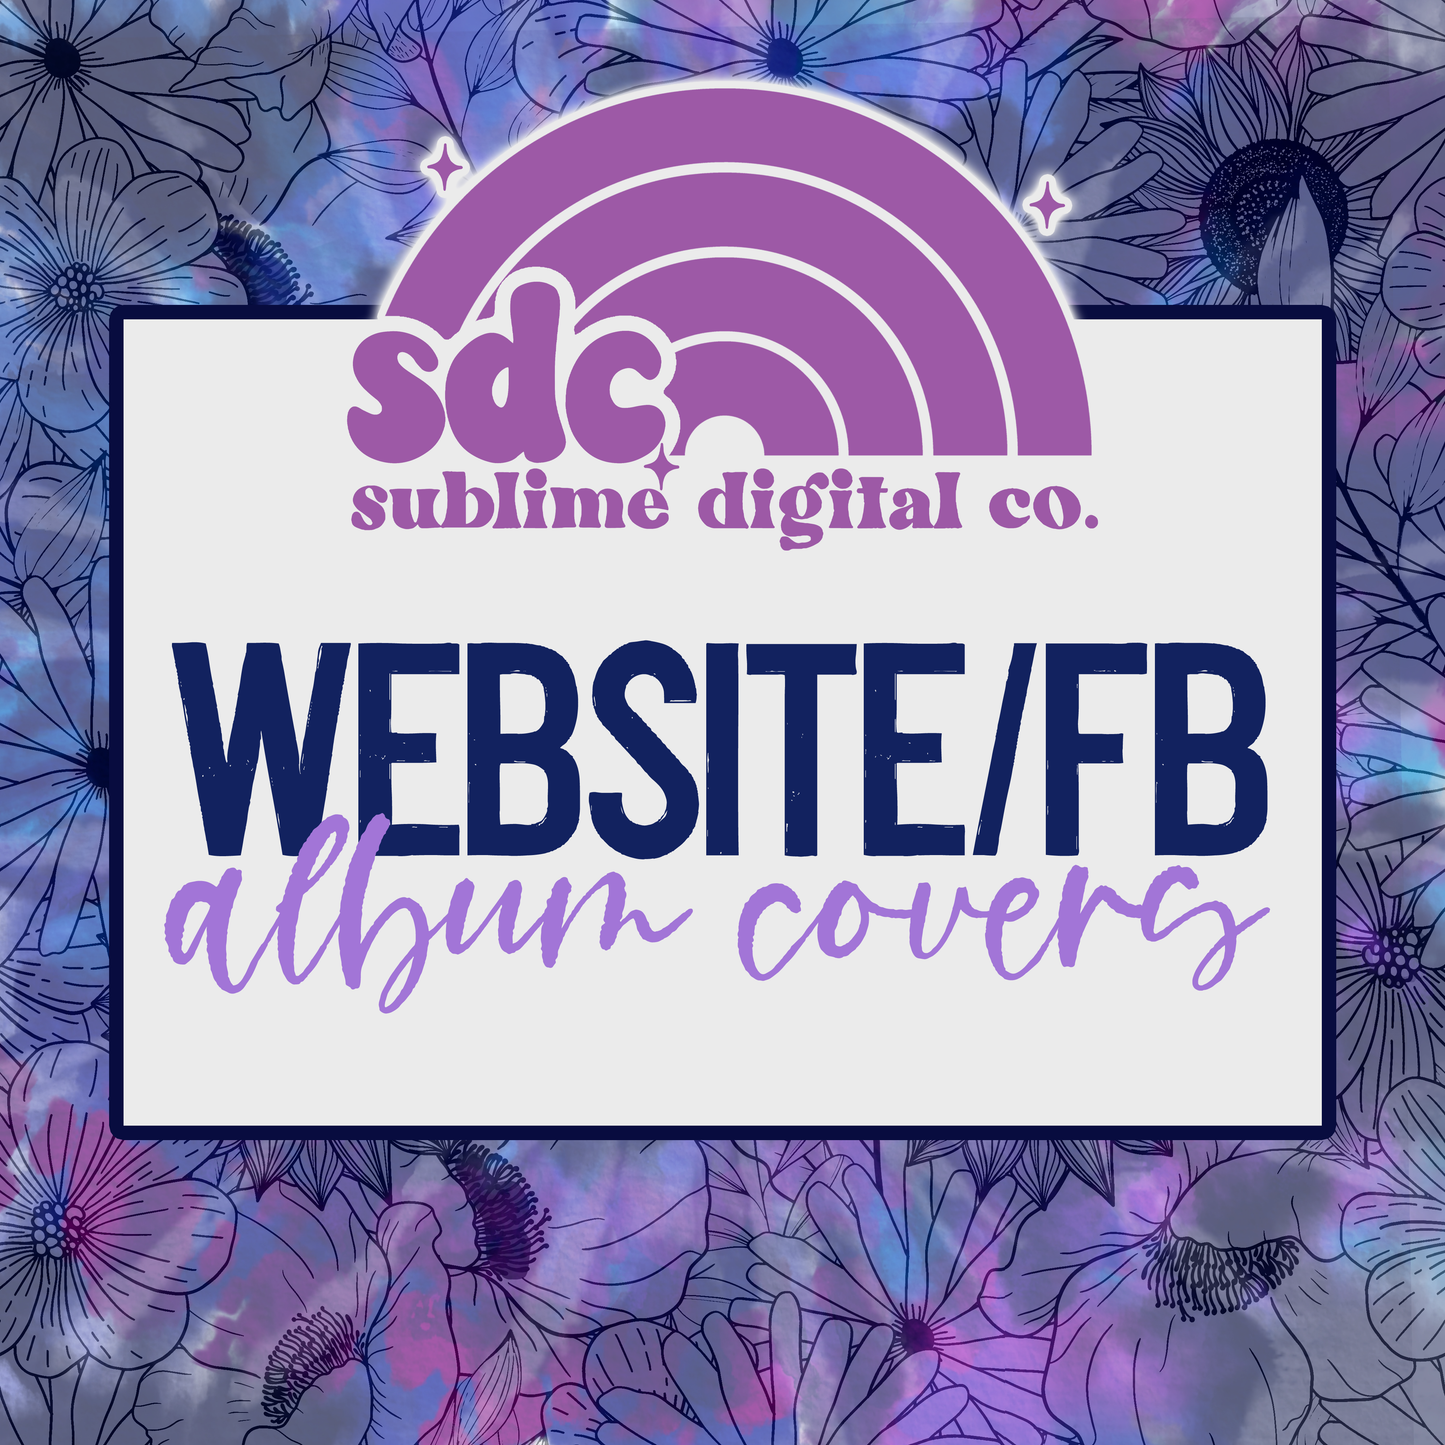 Website/Facebook Album Covers • Business Branding • Custom Digital Designs